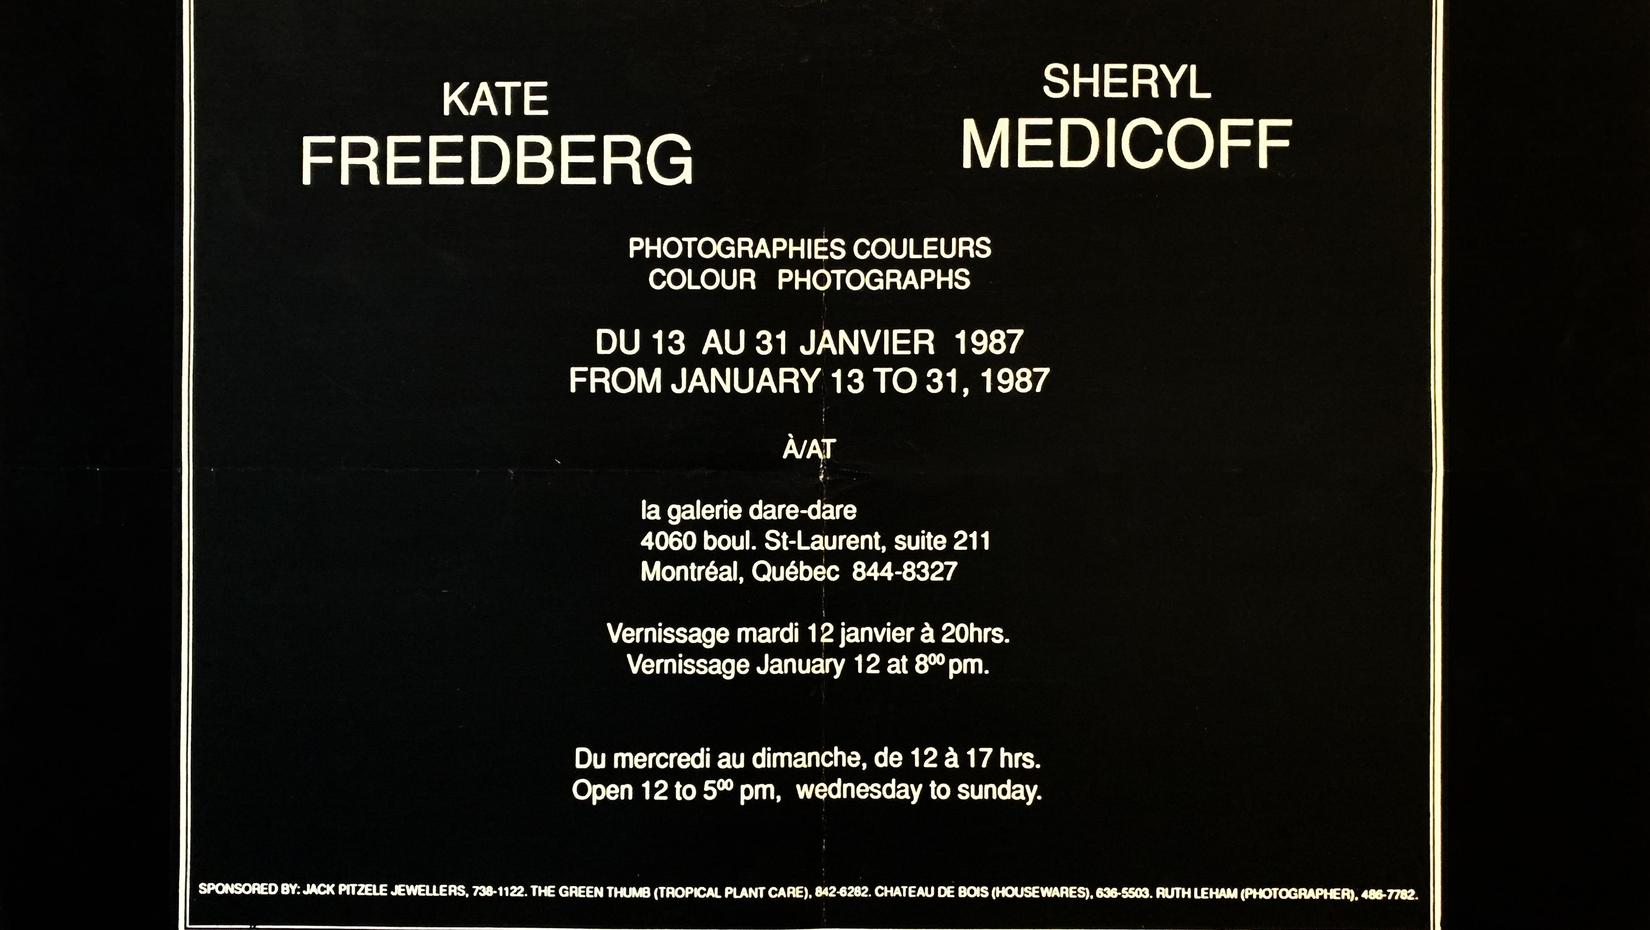 Kate Freedberg and Sheryl Medicoff